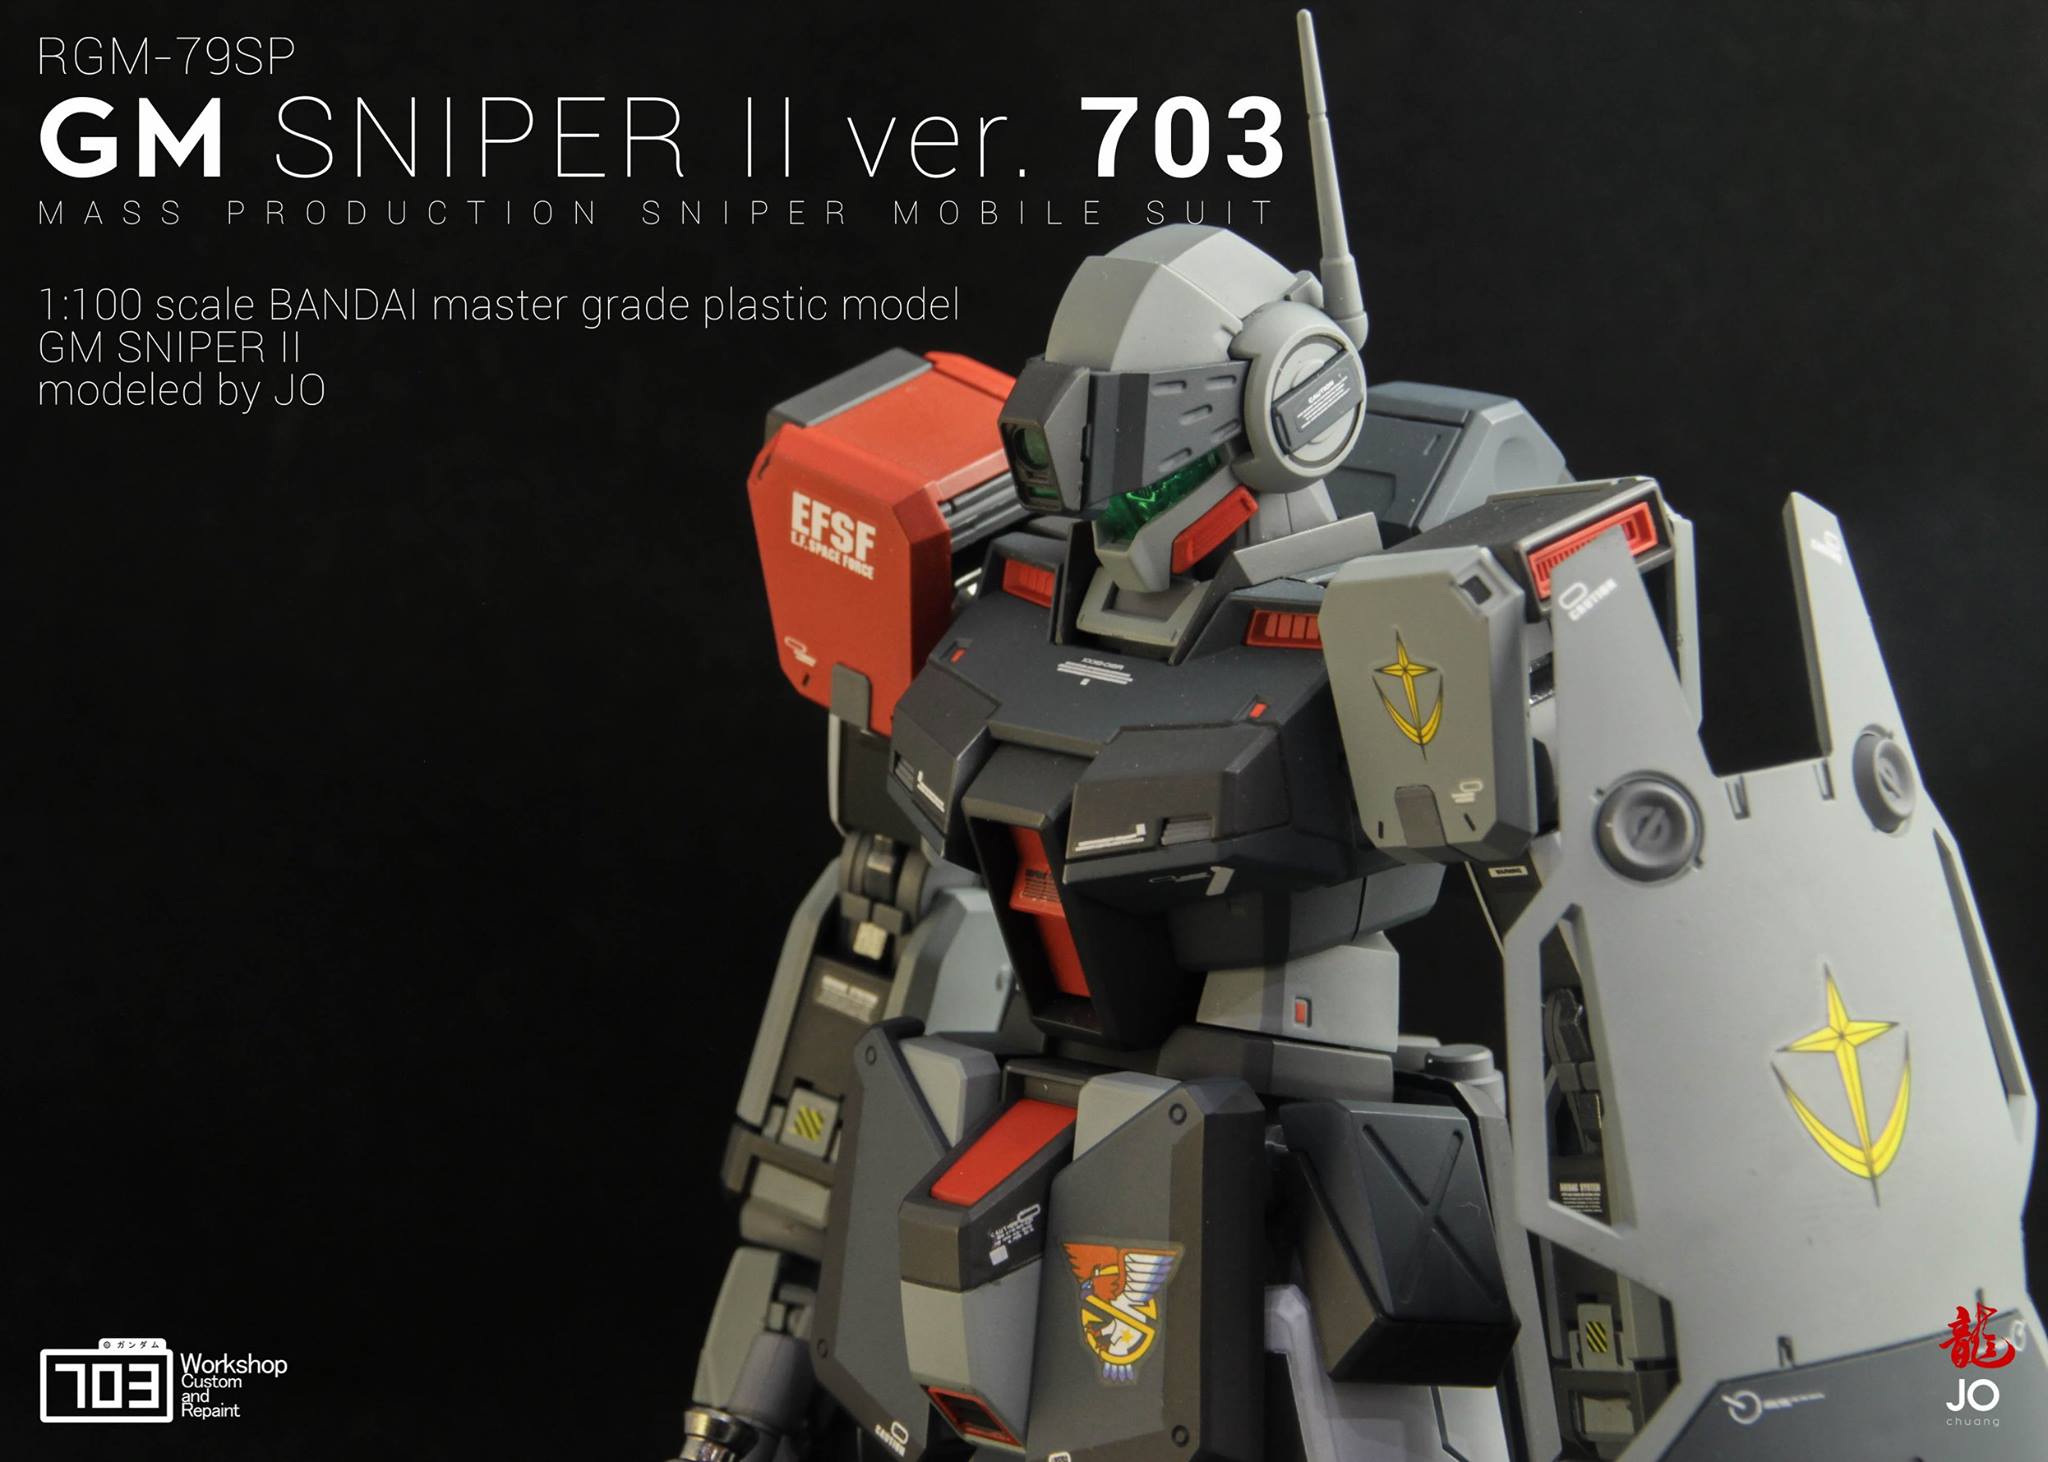 For Bandai MG 1/100 RGM-79SP GM SNIPER II GUNDAM Modify Armor Etch Upgrade 